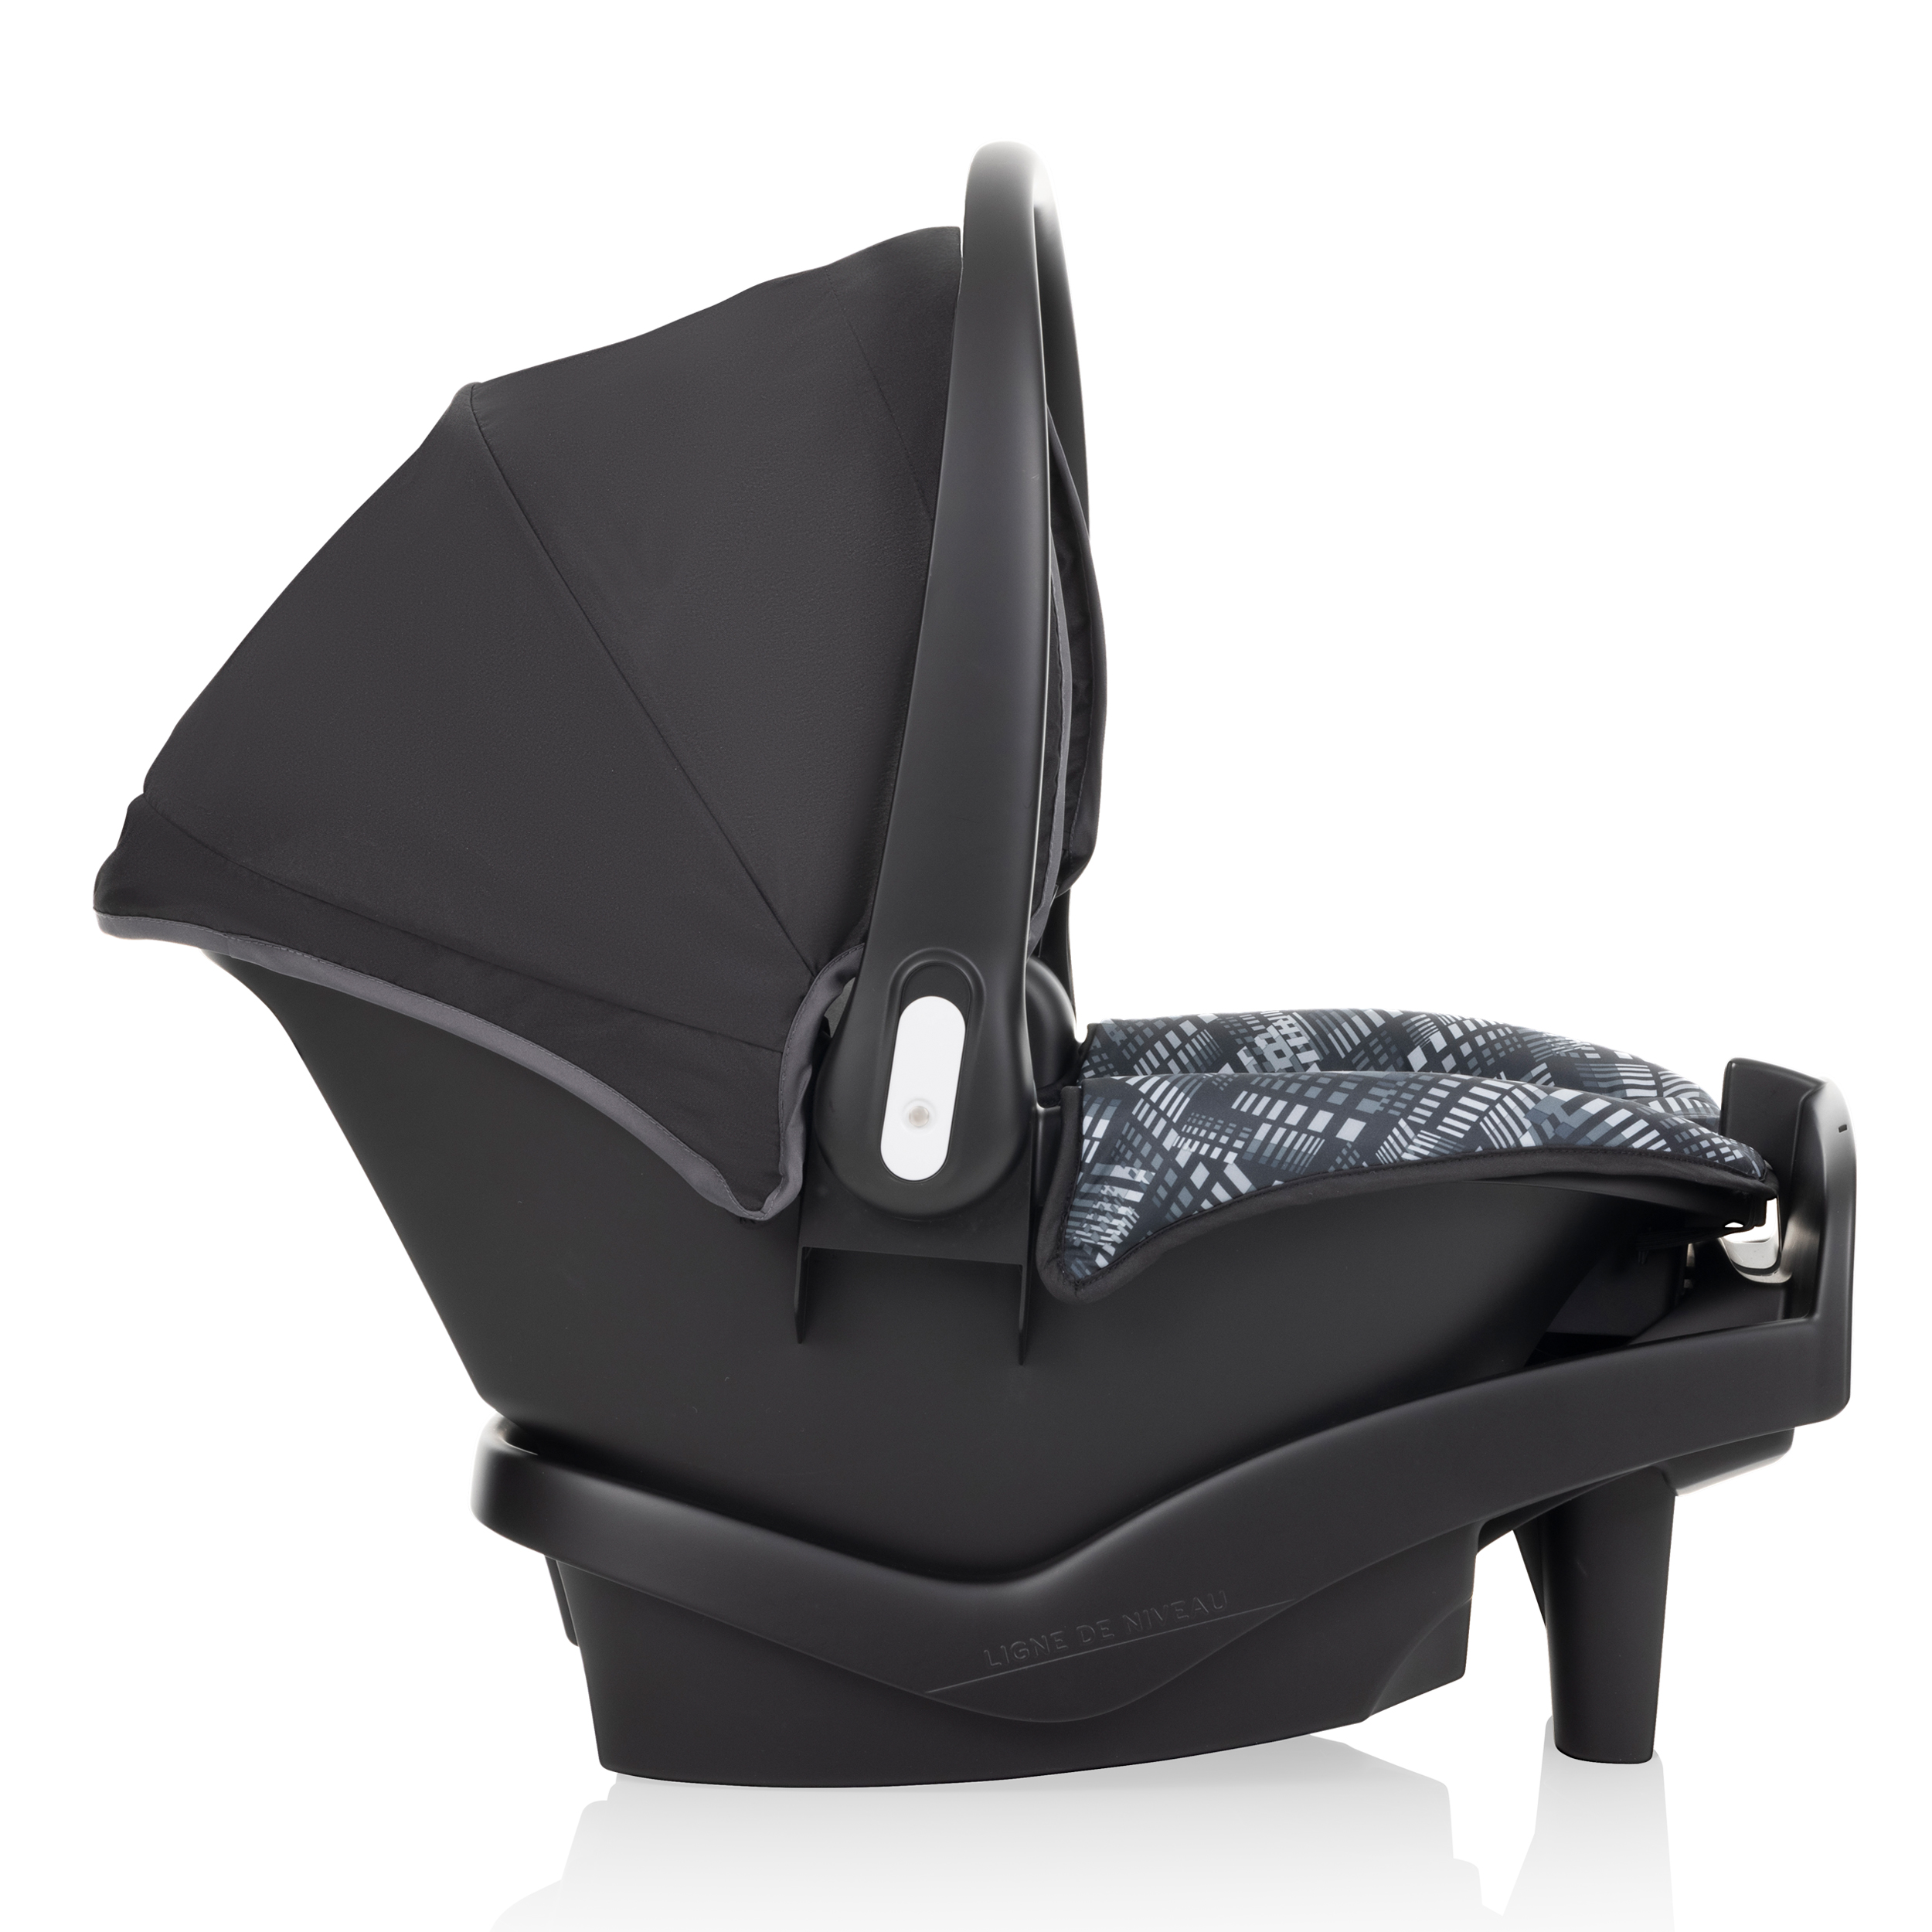 Evenflo NurtureMax Infant Car Seat (Brooklyn Gray) - image 5 of 17